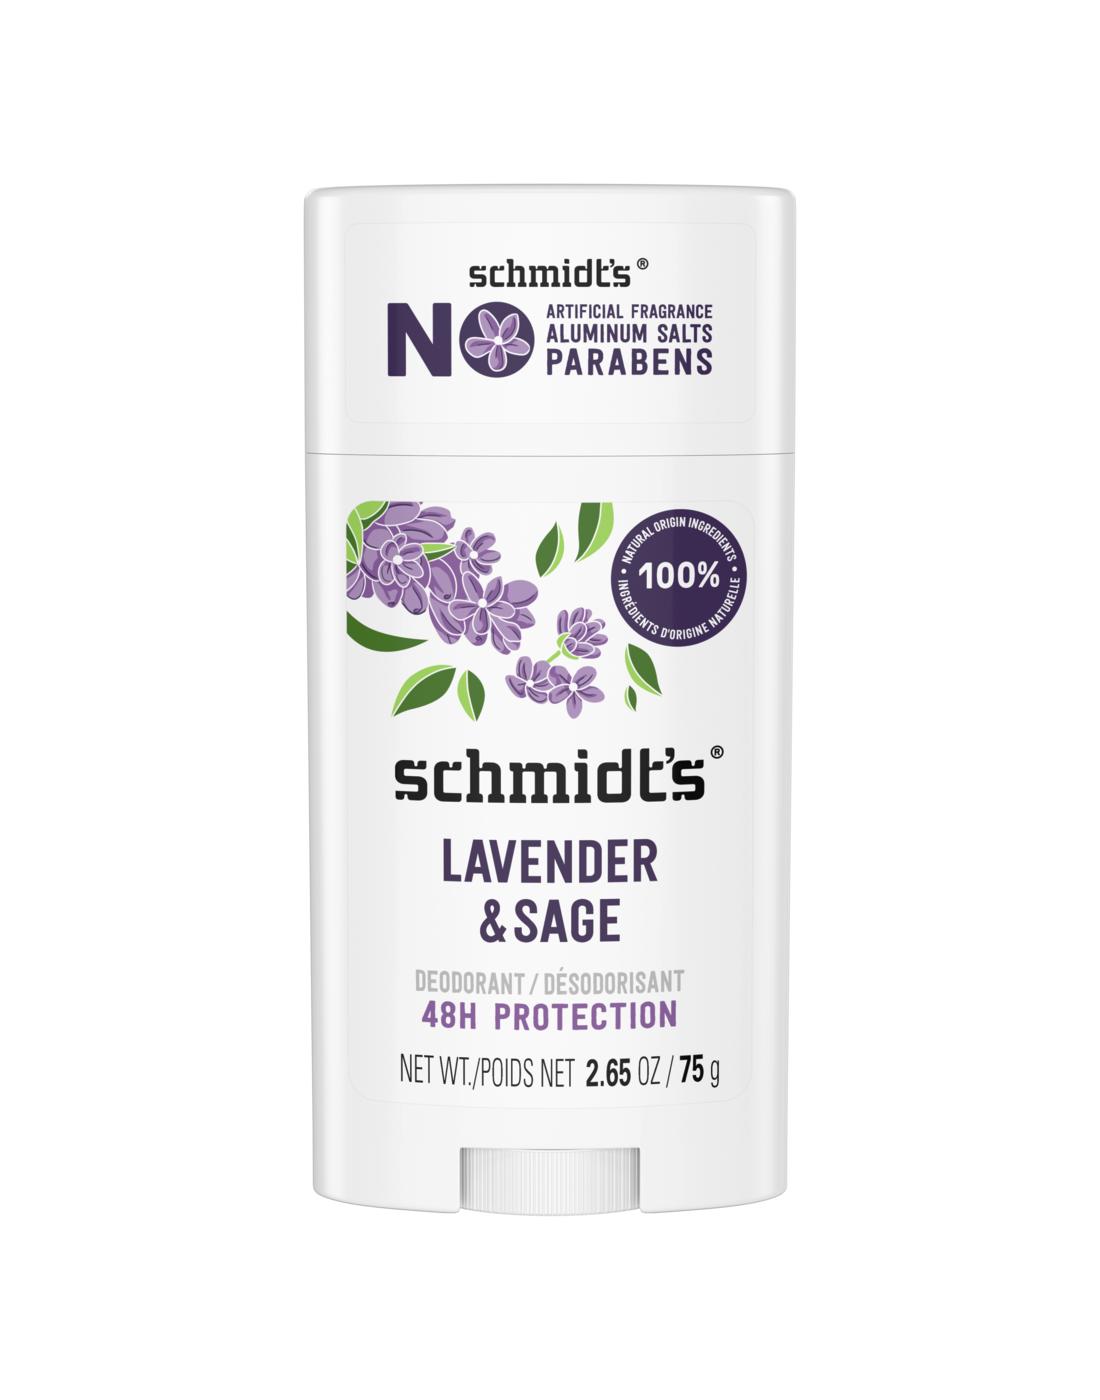 Schmidt's 48 Hr Deodorant - Lavender & Sage; image 1 of 4